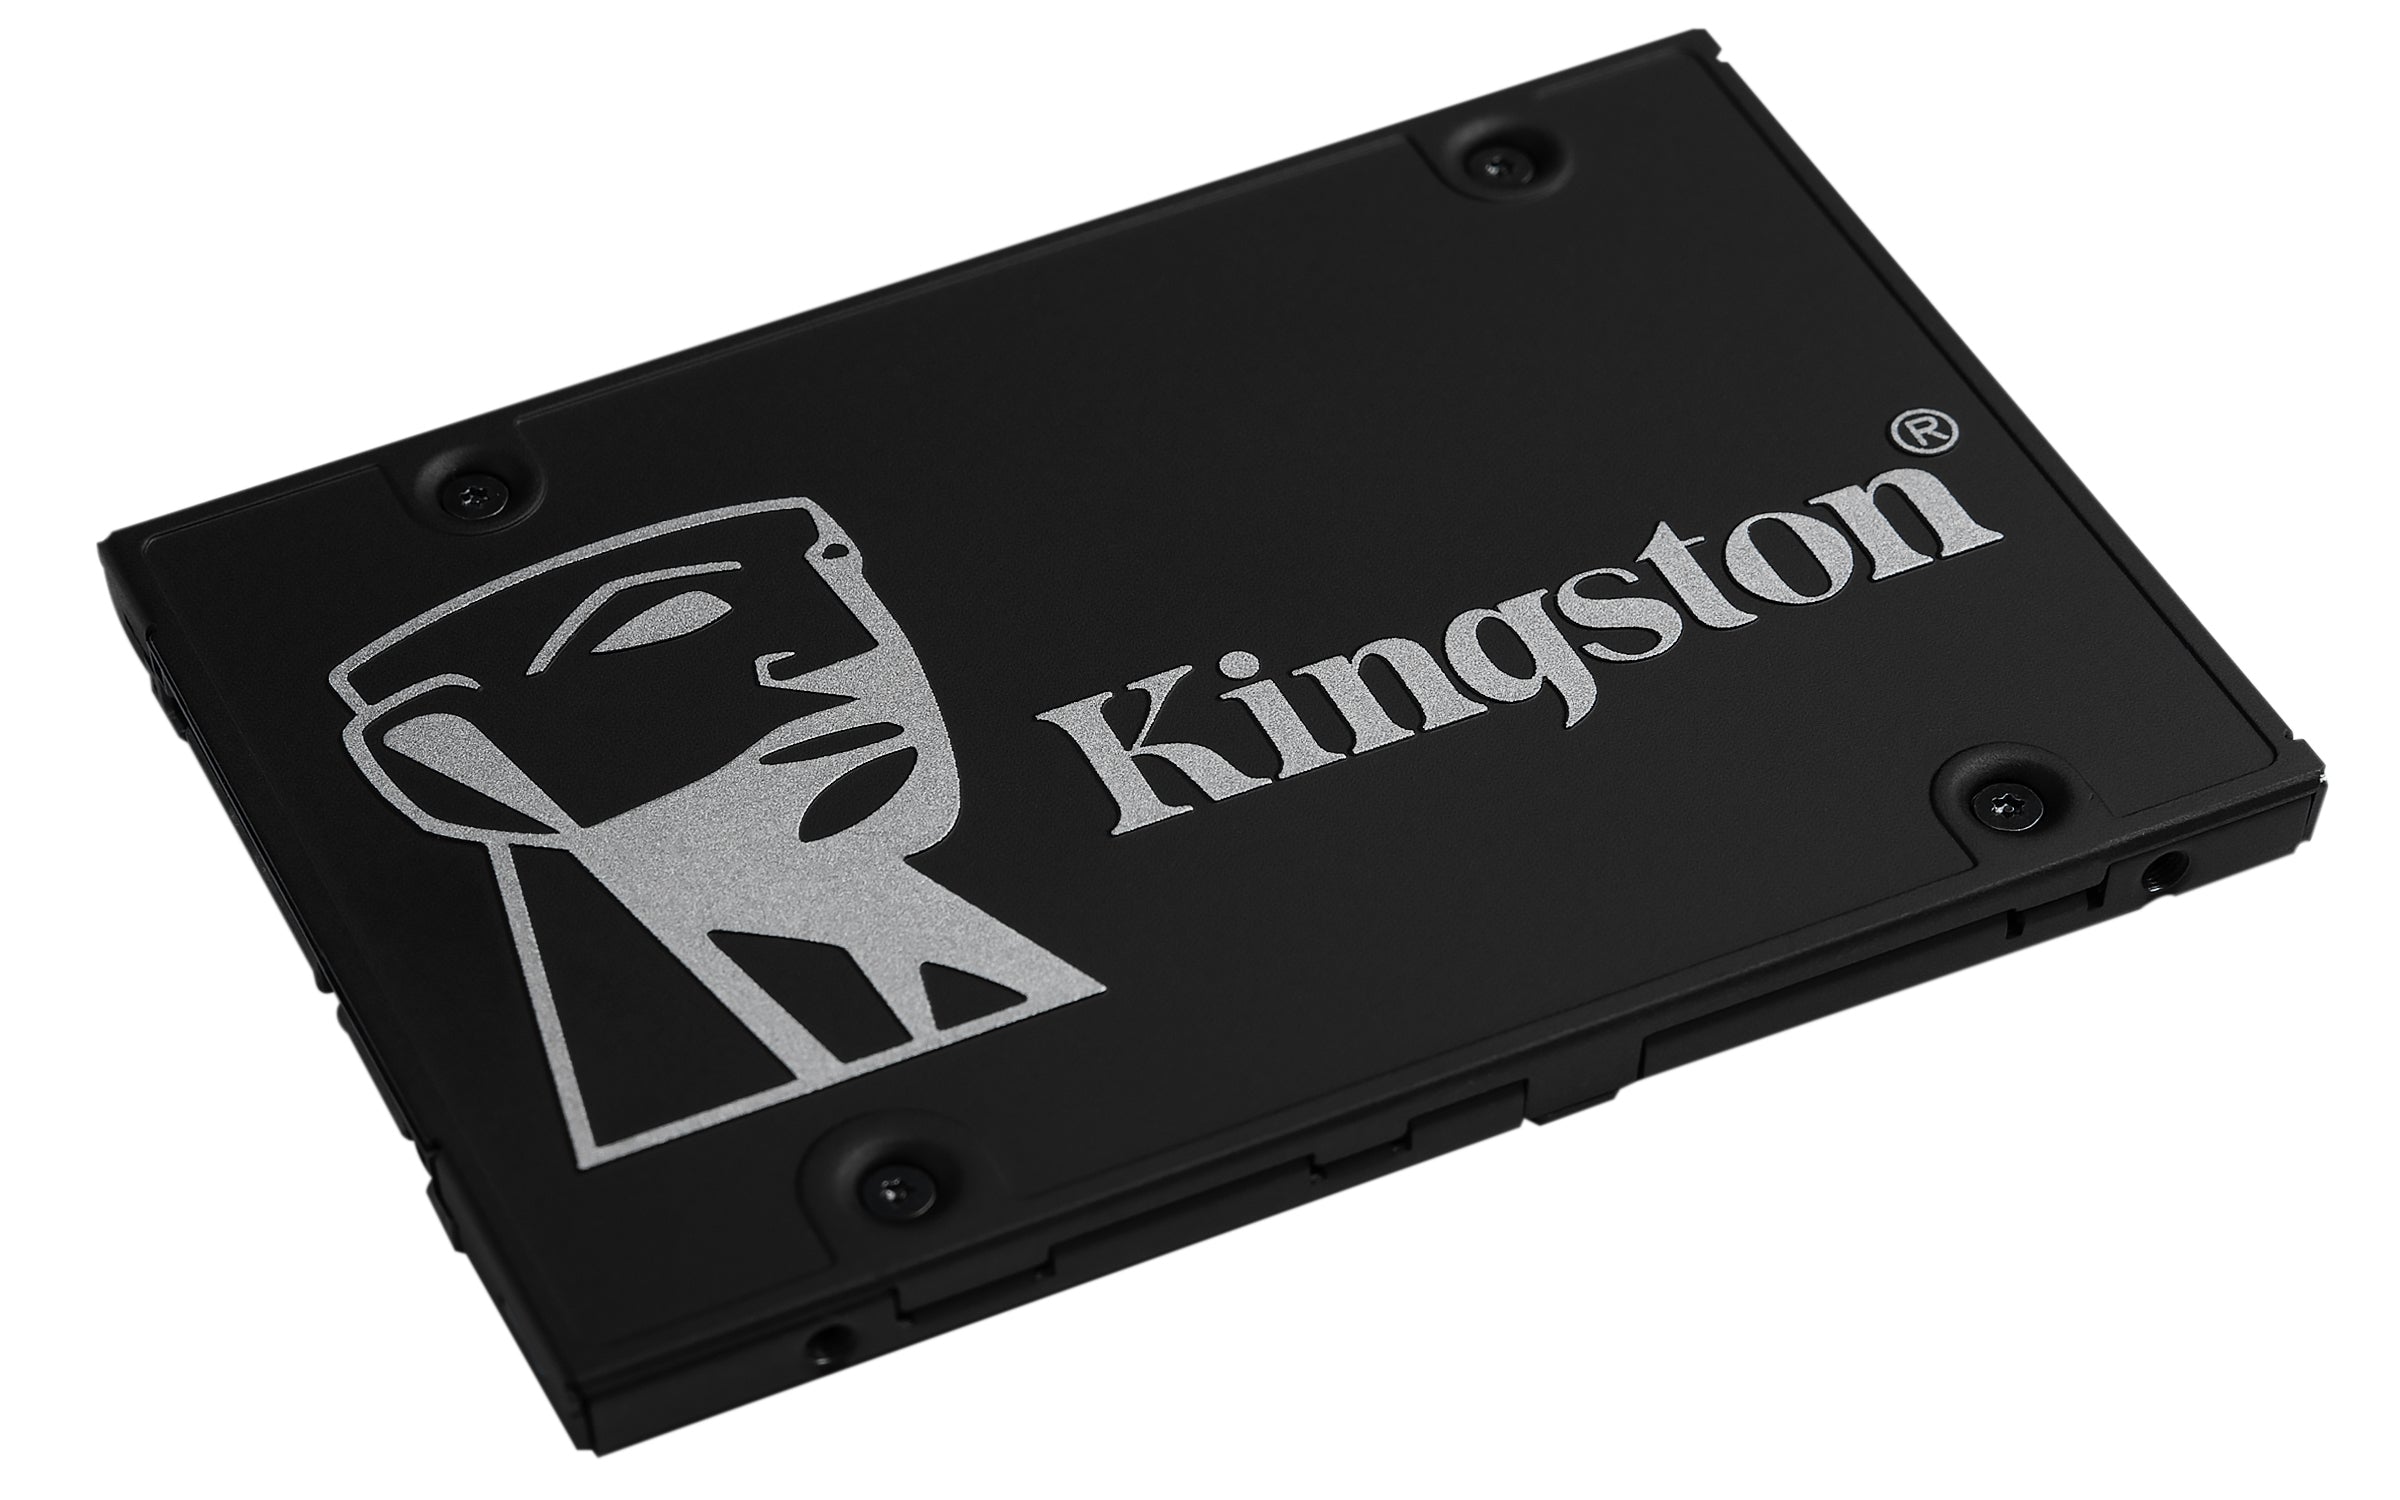 Ssd Kingston Technology Kc600 Unidad De Estado Solido 256Gb Sata3 2.5 R. 550Mb/S W.500Mb/S